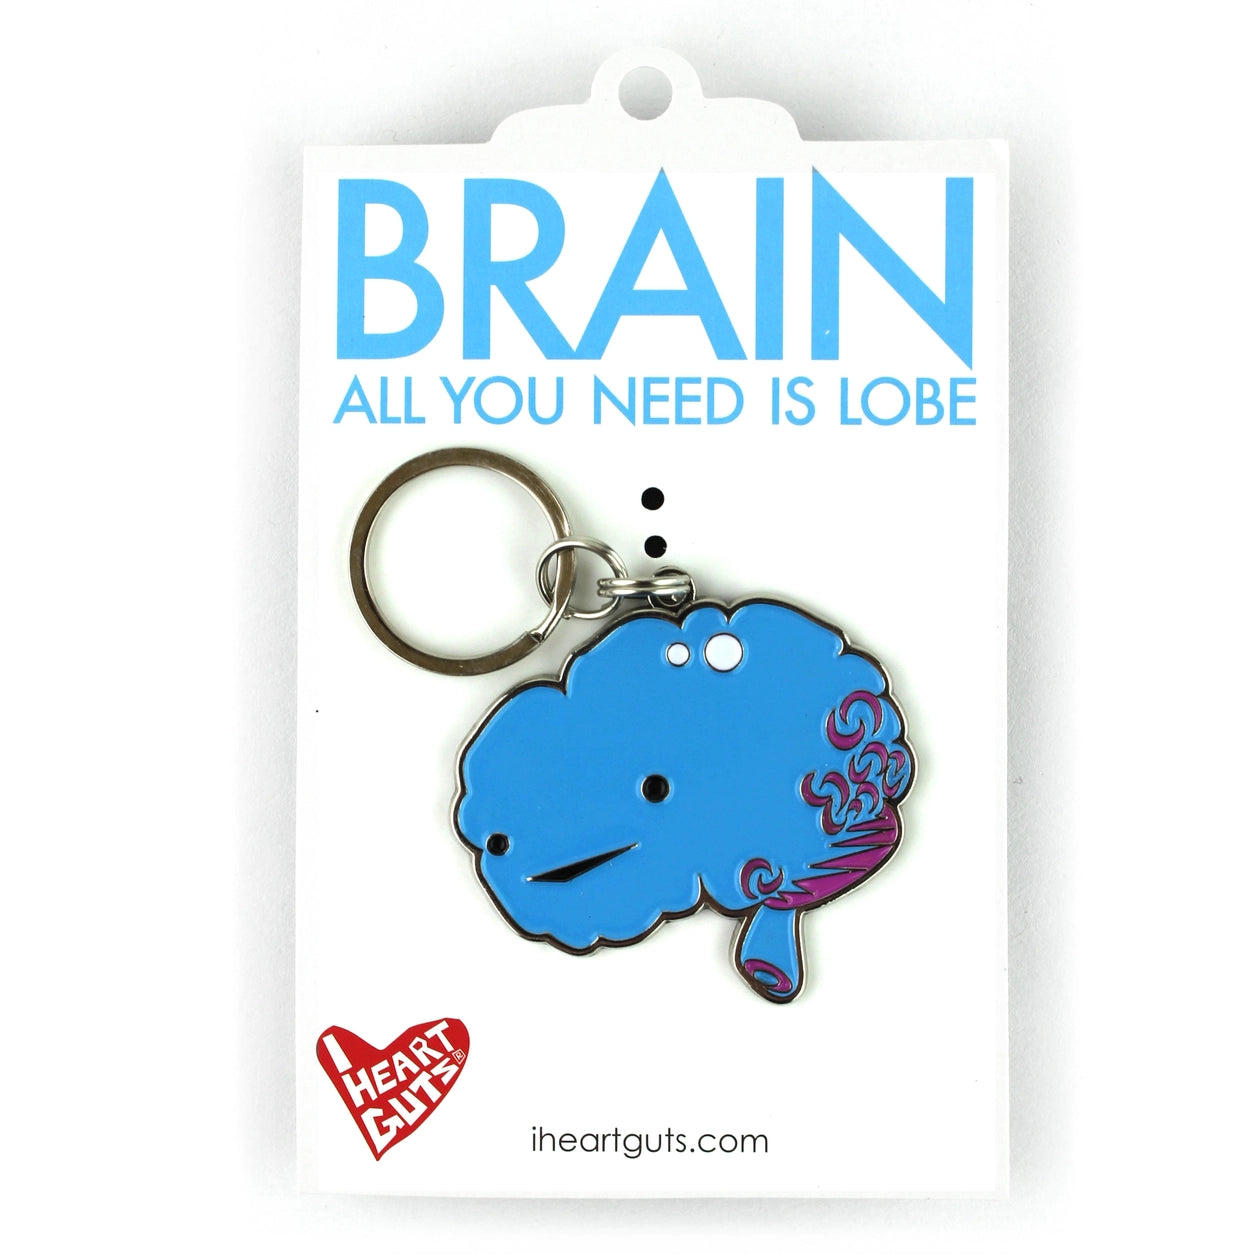 Keychain brain - All you need is lobe